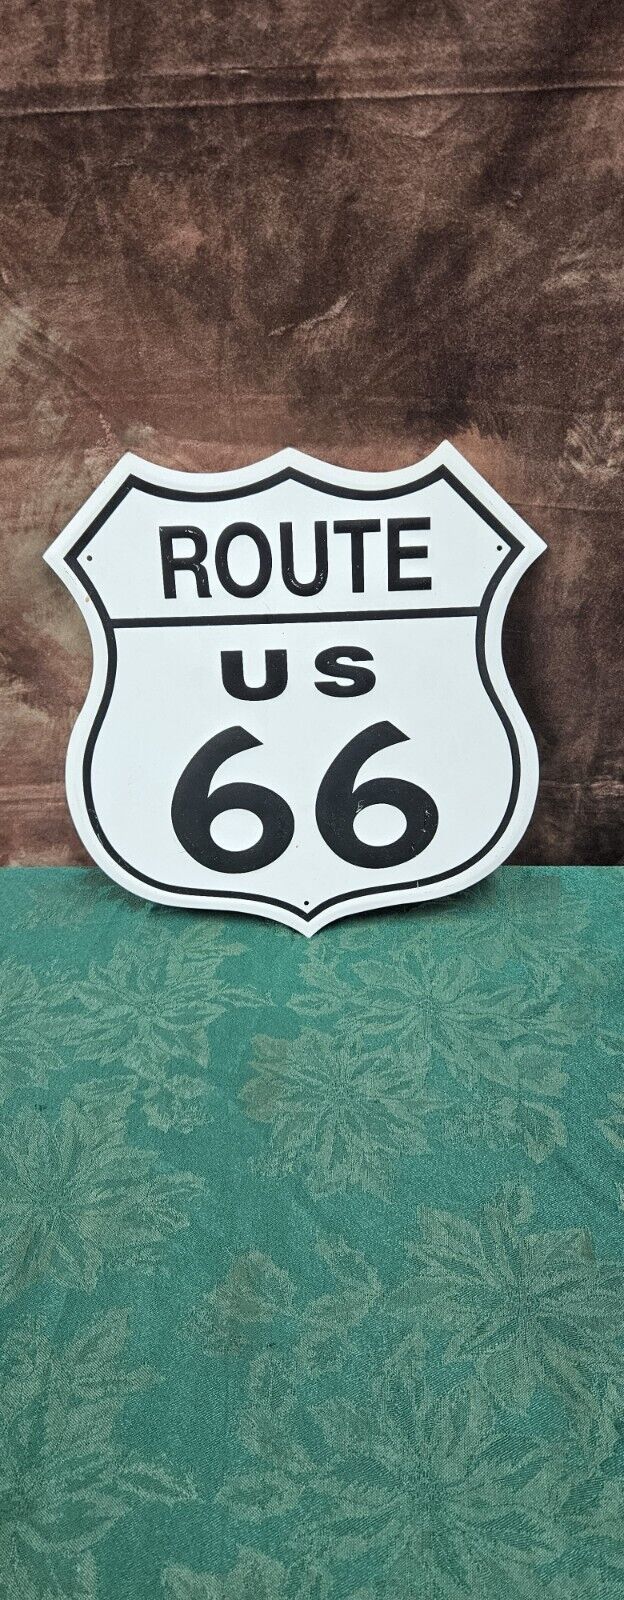 Vintage Route 66 Road Sign